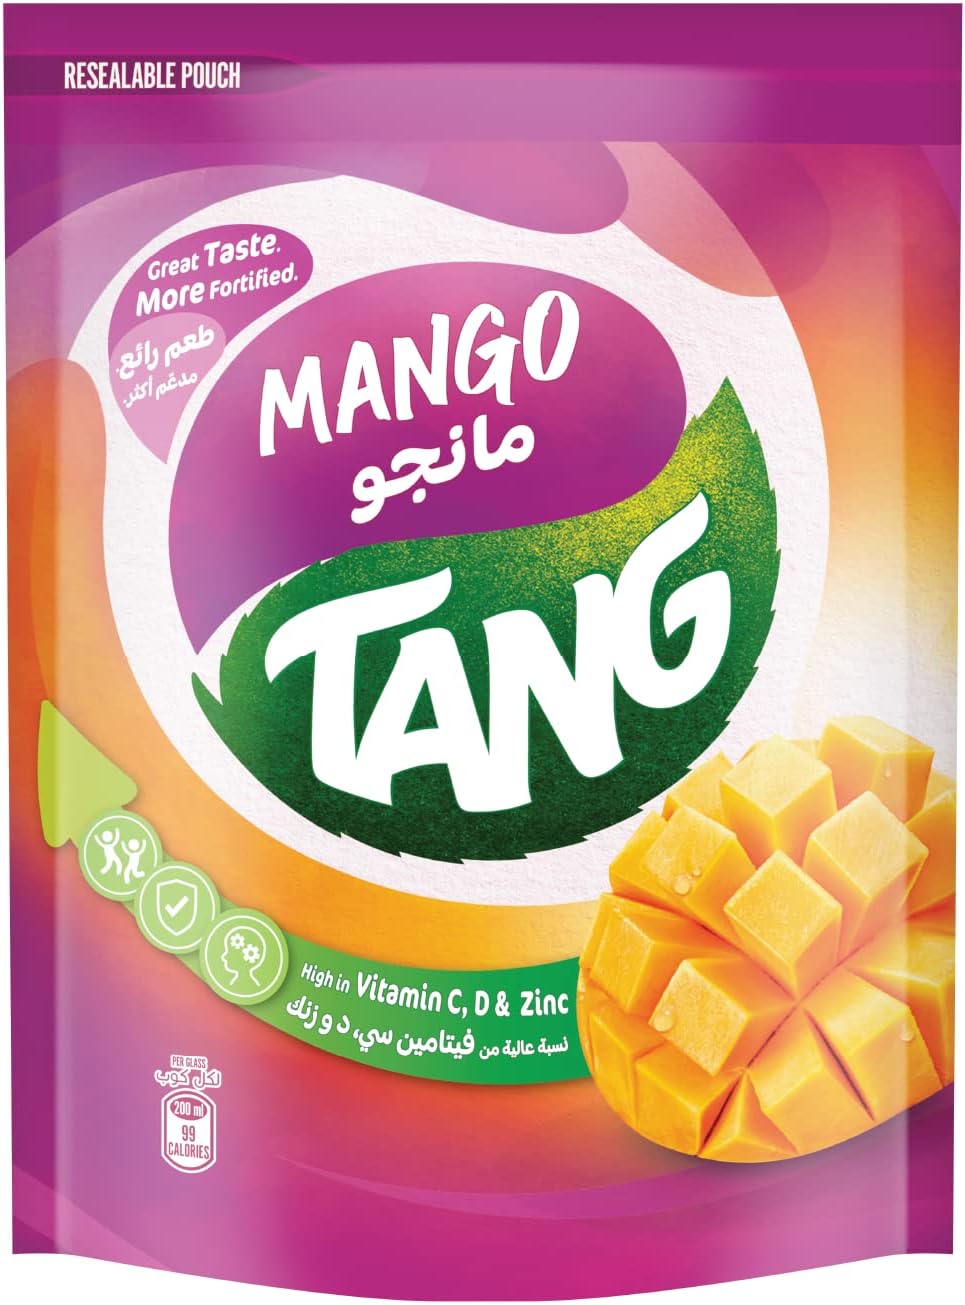 Tang Mango Flavoured Juice, 375Gm